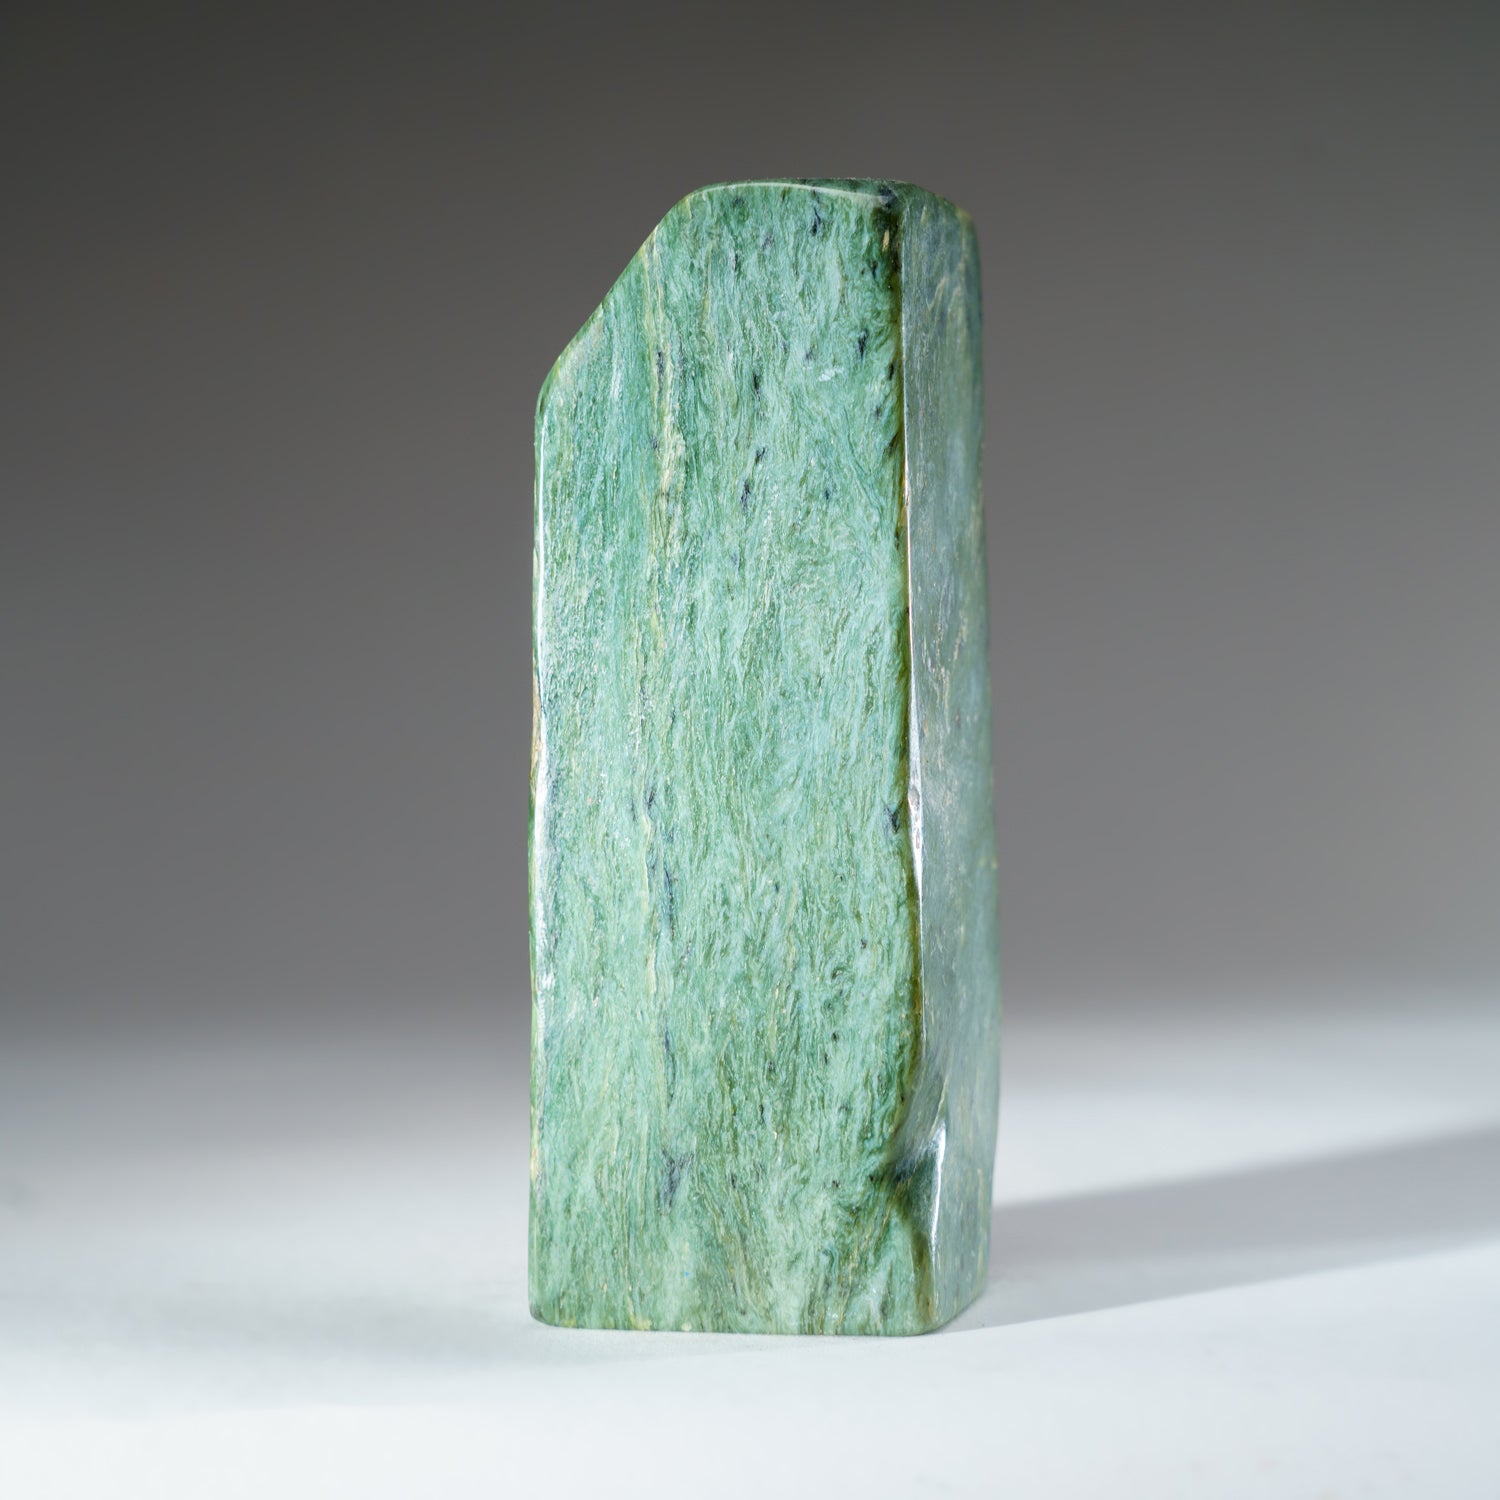 Polished Nephrite Jade Freeform from Pakistan (2.5 lbs)